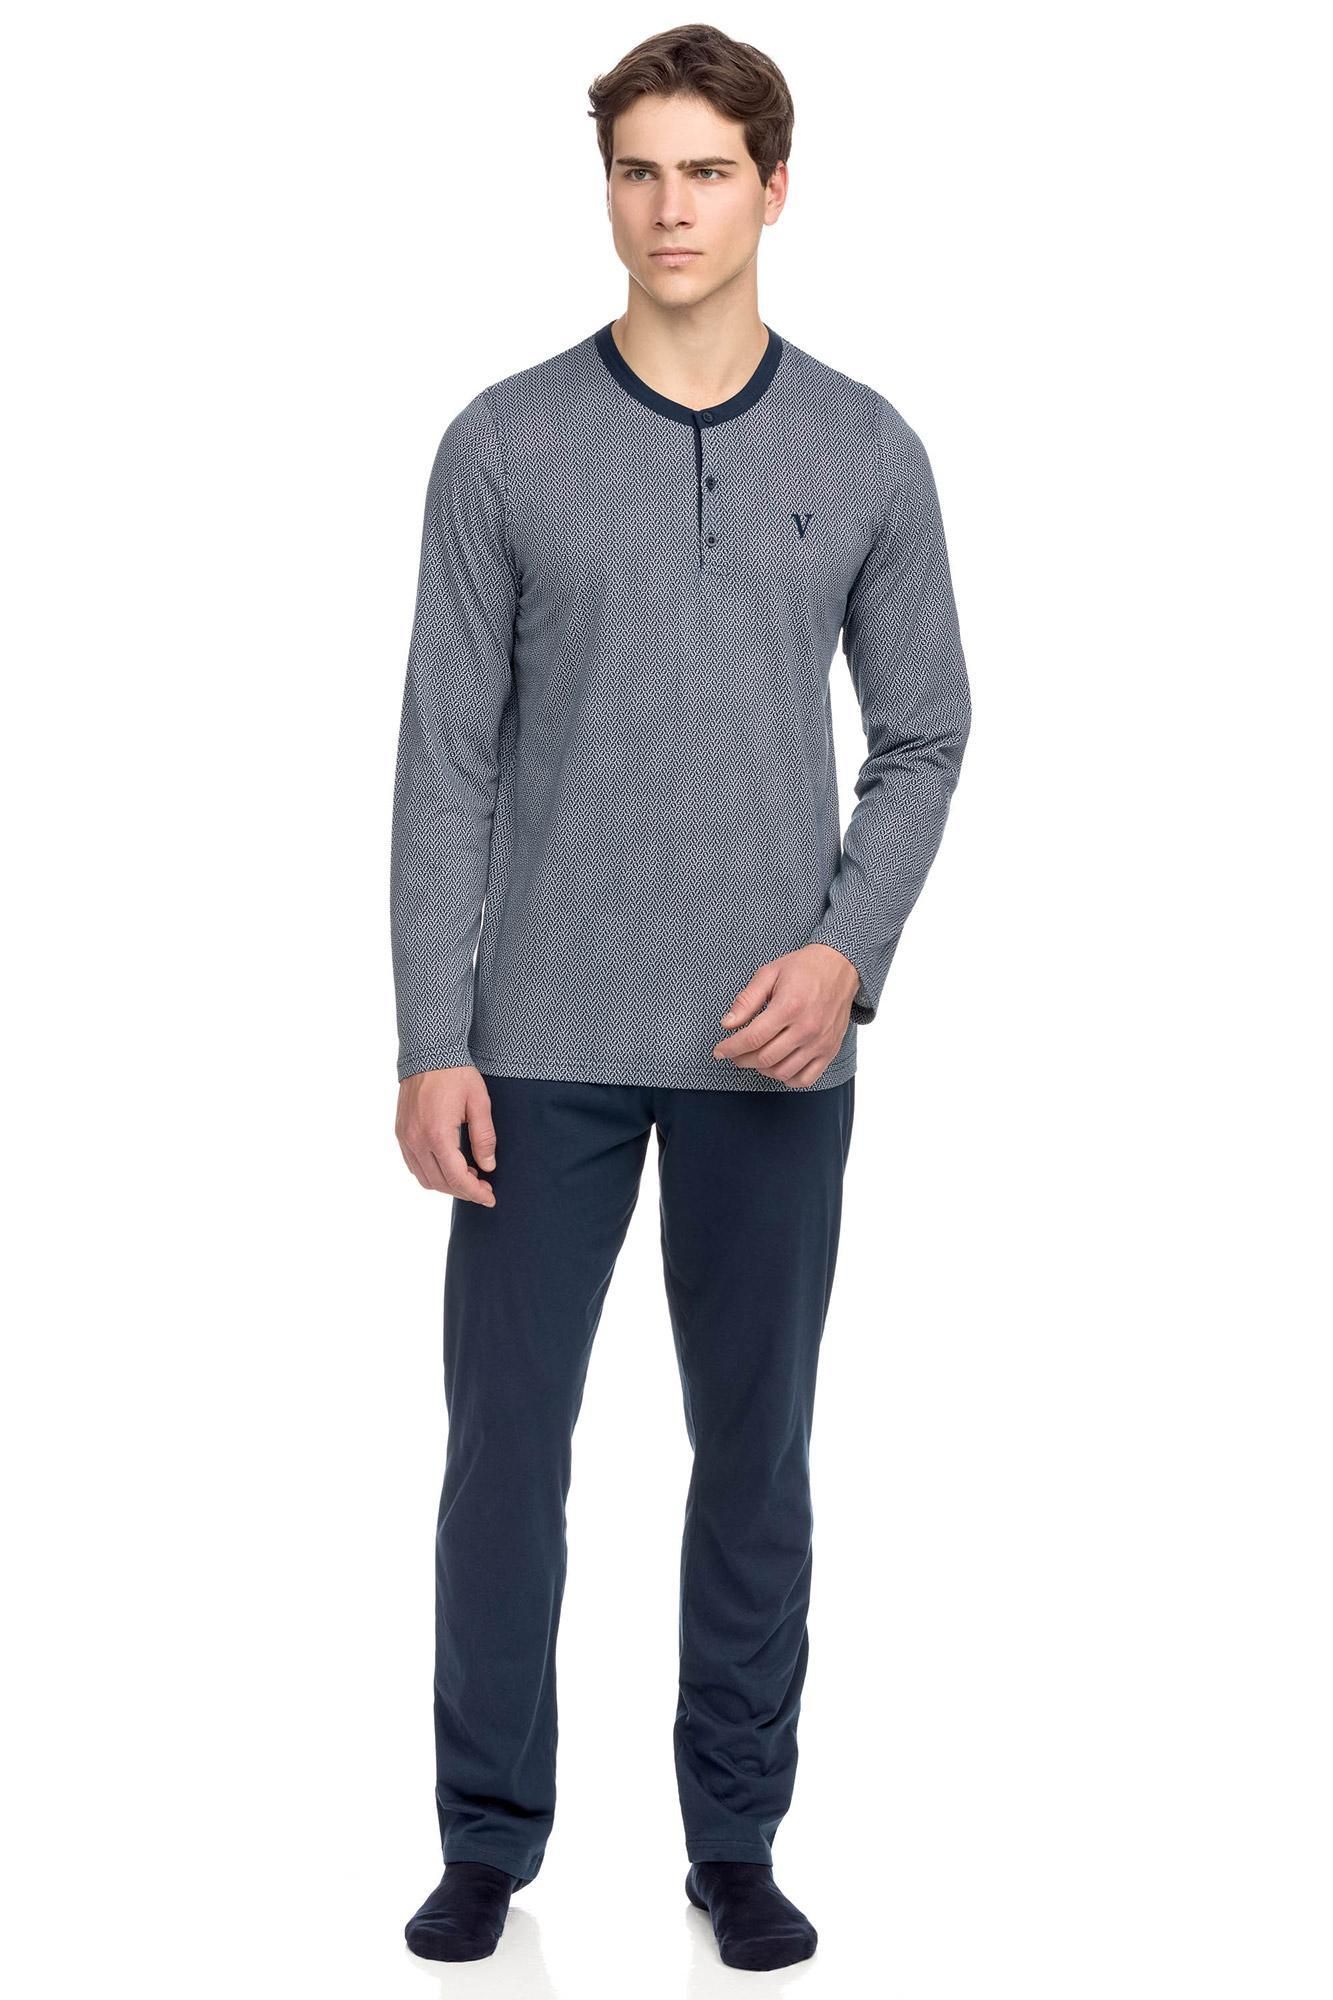 Men’ Cotton Pyjamas with button placket